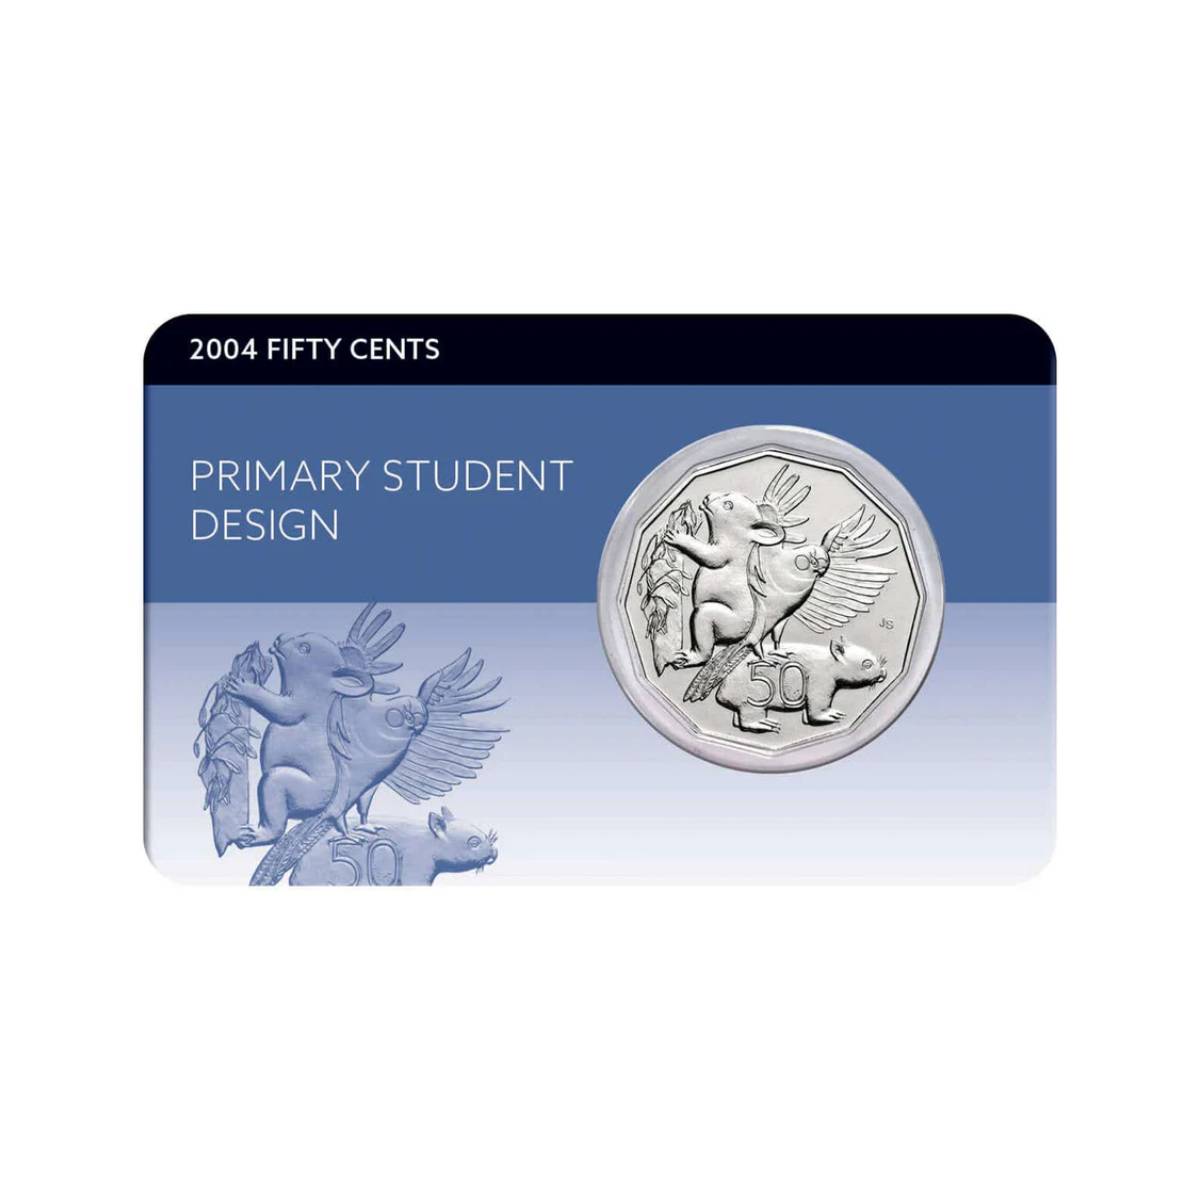 Student Design 2004 50c Cu-Ni Coin Pack